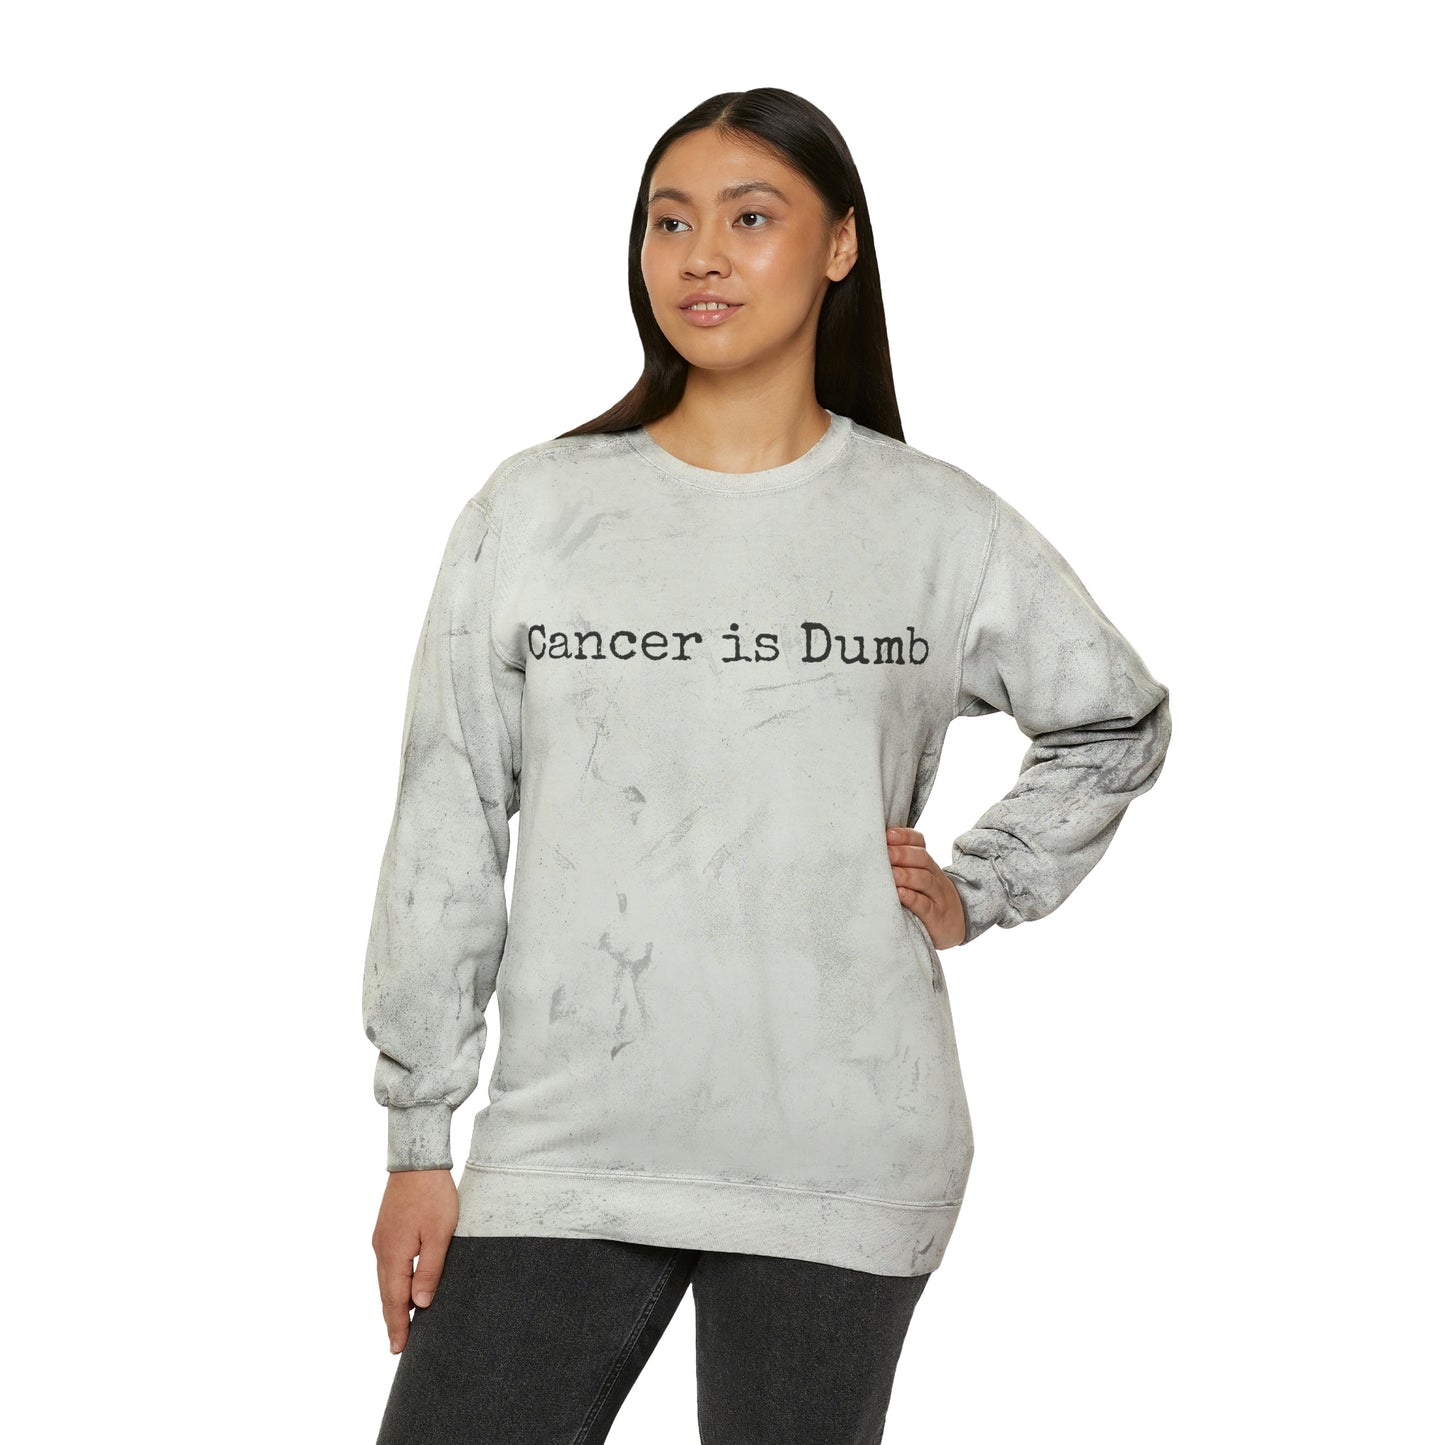 Unisex Color Blast Crewneck Sweatshirt Mens Womens Apparel Clothing Anti Cancer Cancer is Dumb Survivor Support Humorous Funny